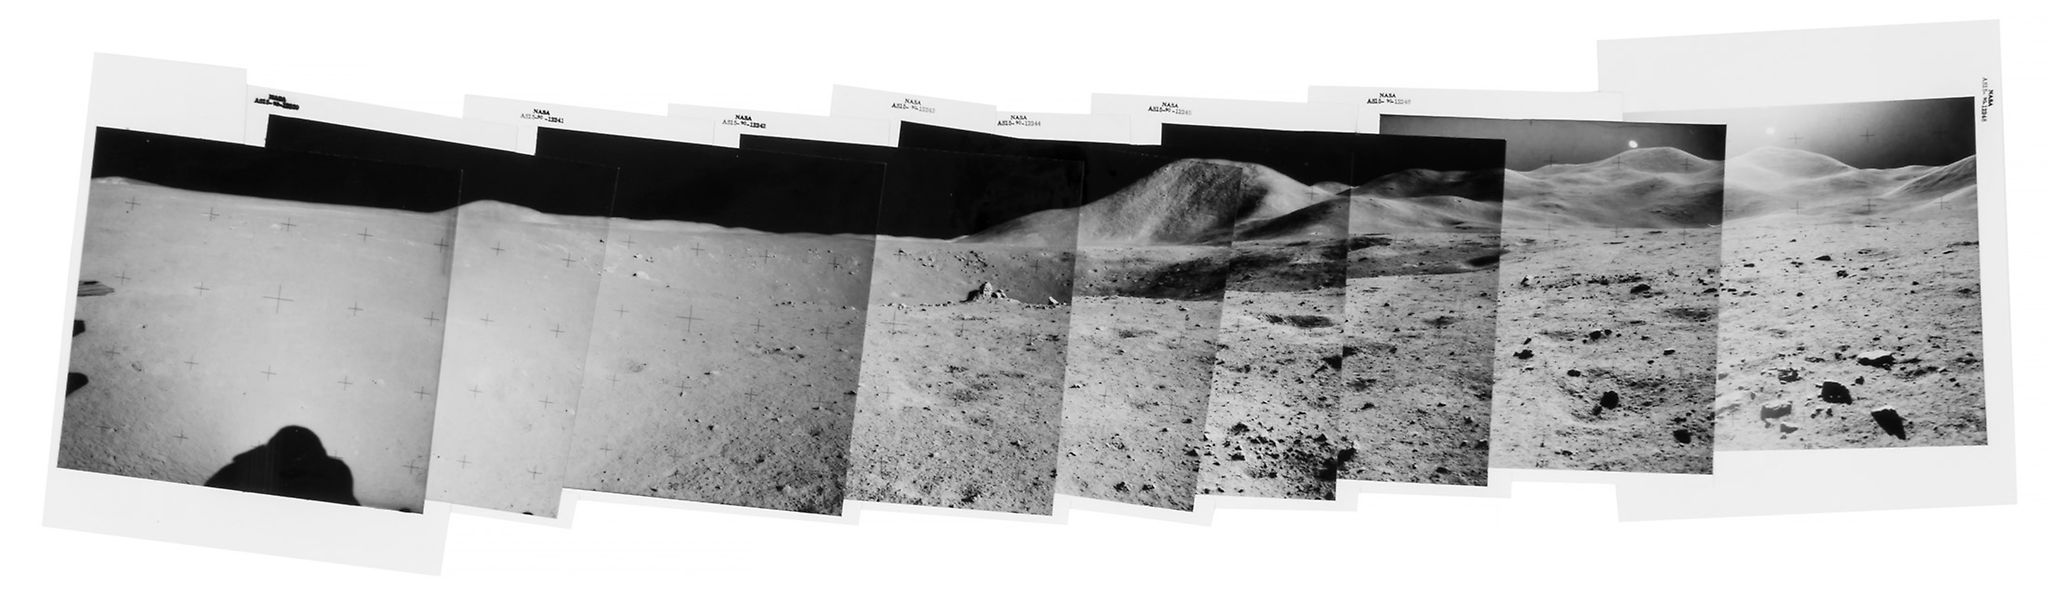 James Irwin - Panorama at Dune Crater, station 4, EVA 2, Apollo 15, August 1971 Mosaic of nine